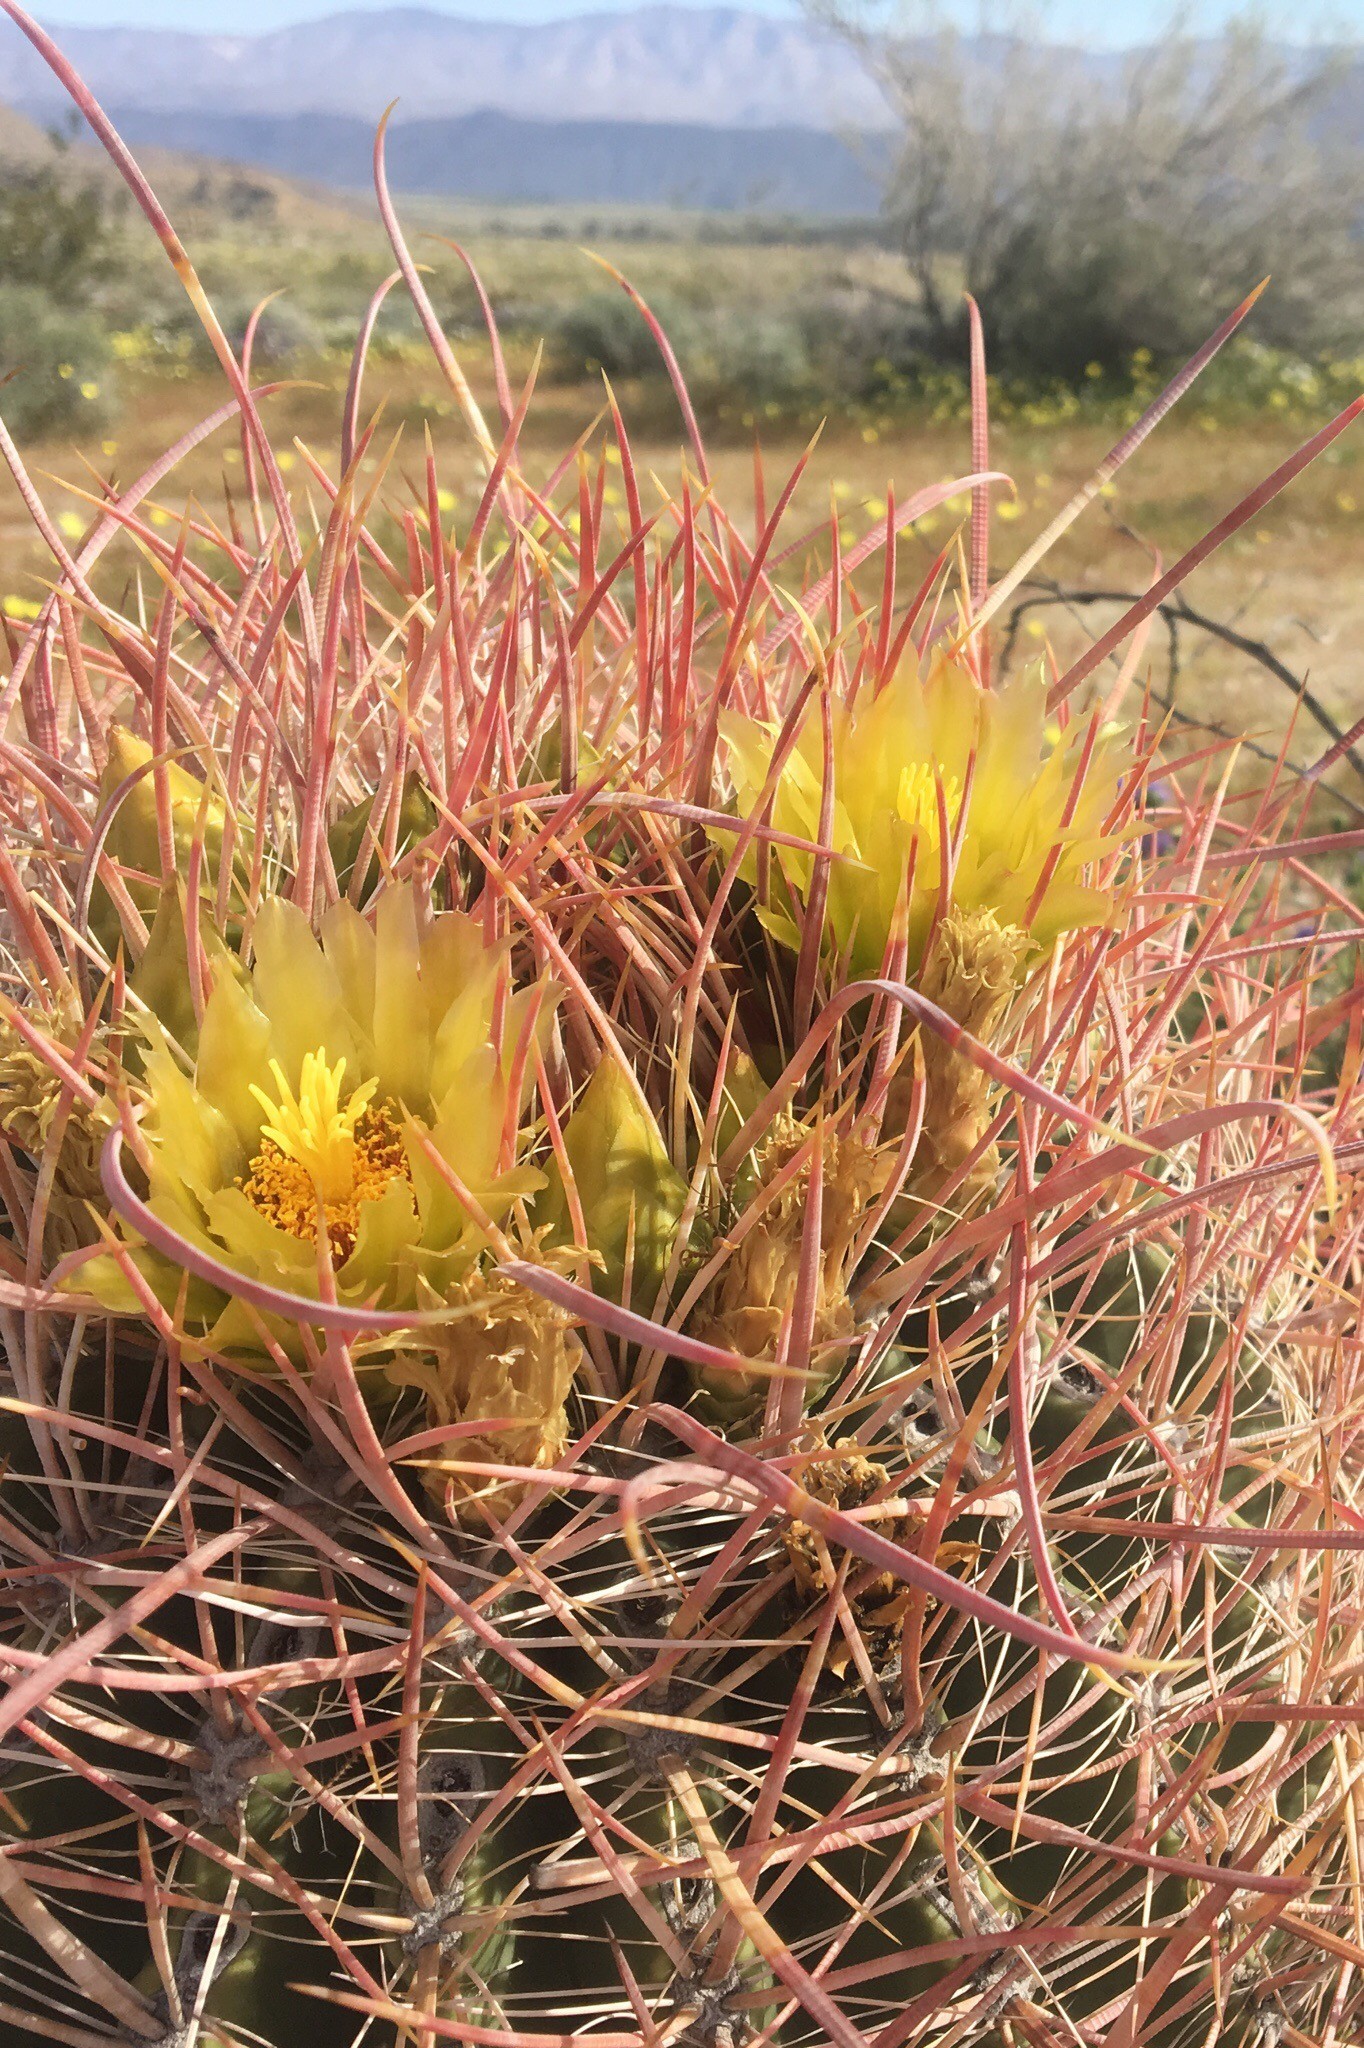 Barrel Cactus in bloom in Anza Borrego desrt